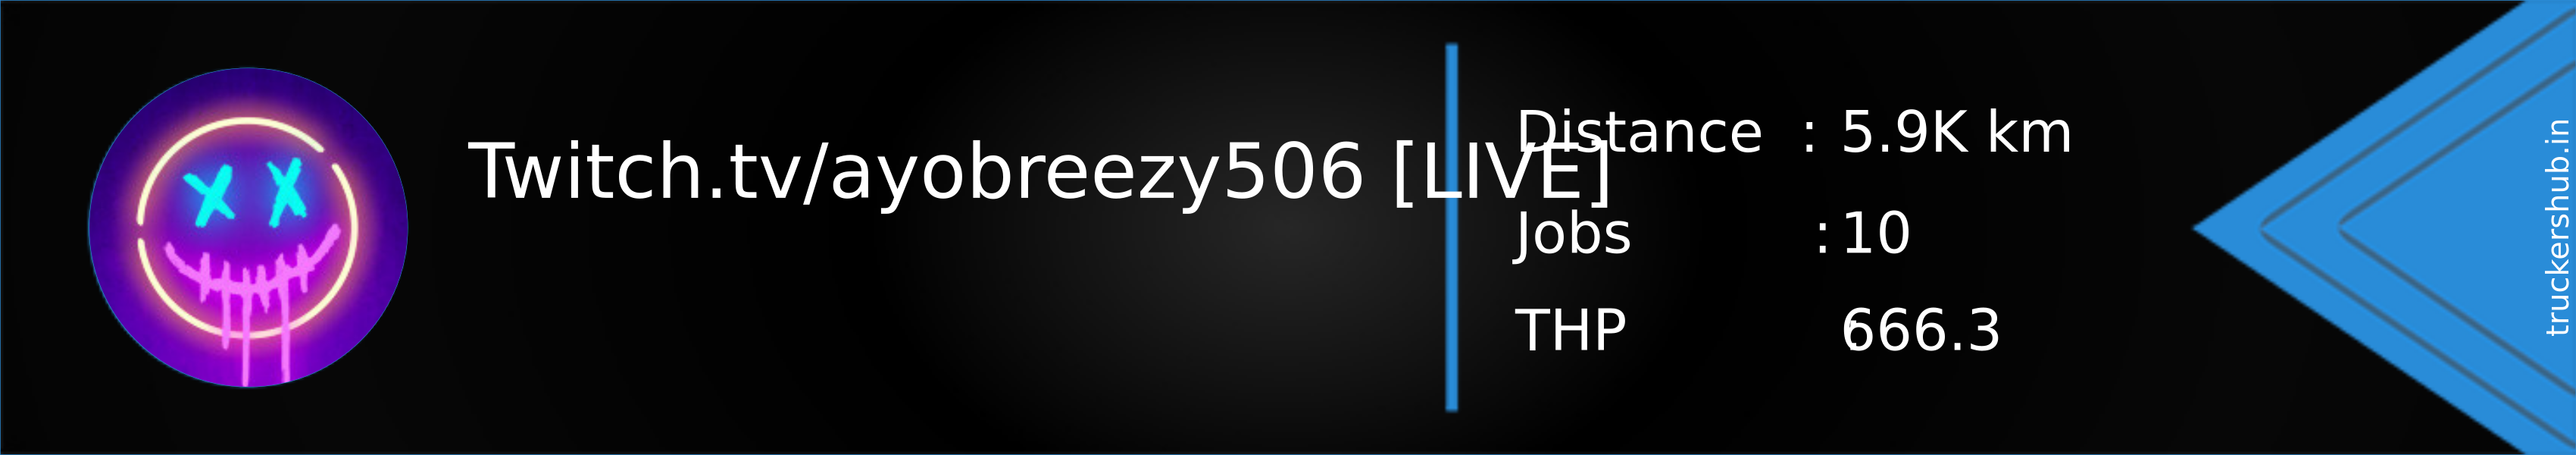 Twitch.tv/ayobreezy506 [LIVE] Banner